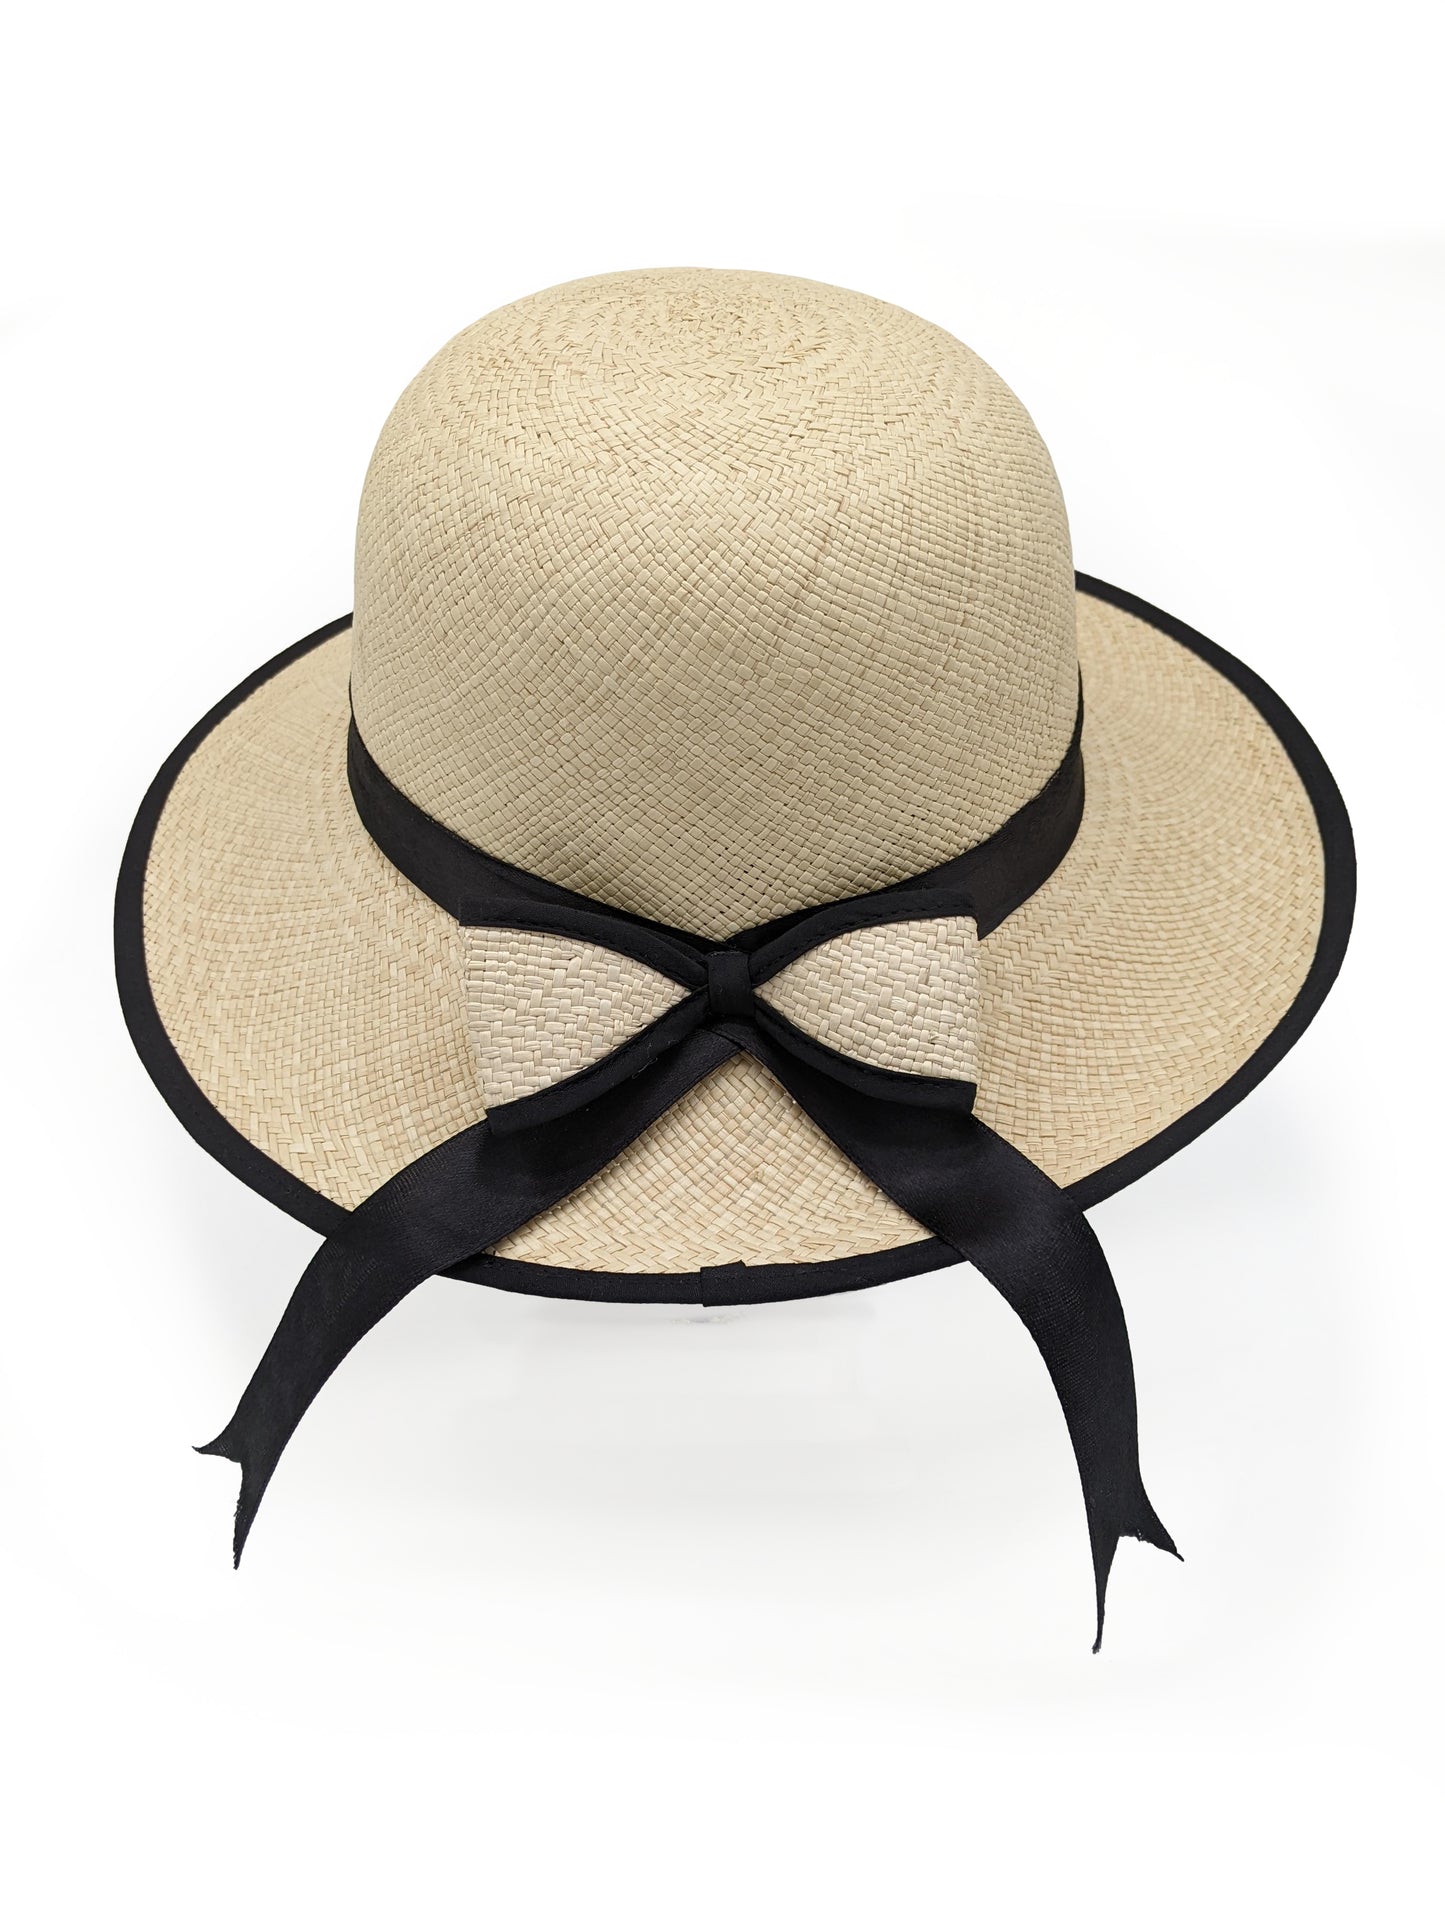 Ladies Panama Hat with Black Bow